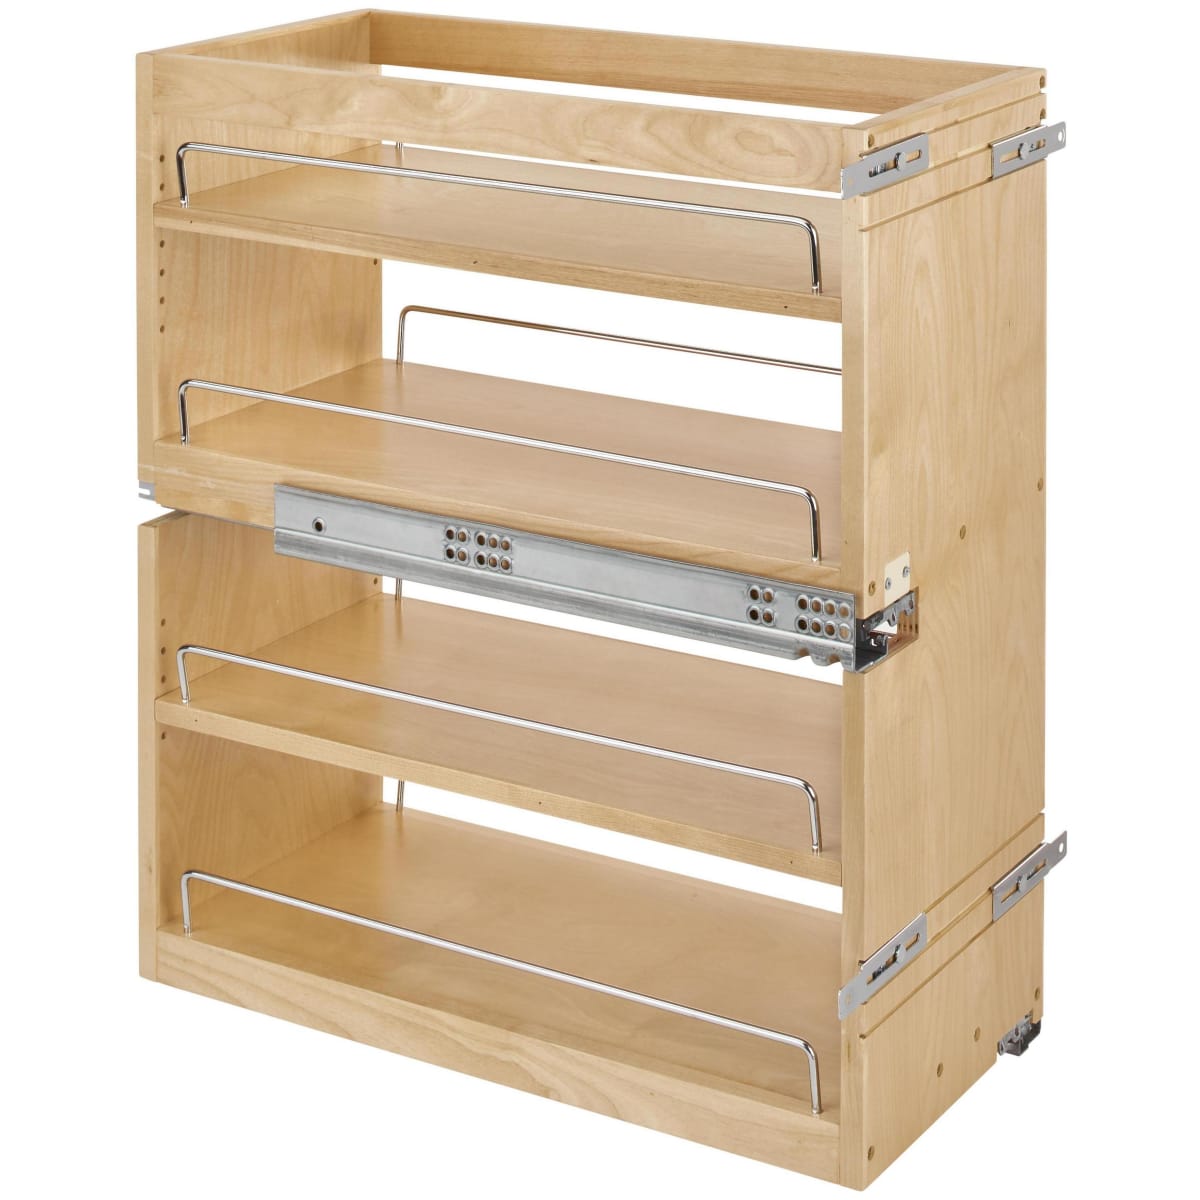 Cabinet Organizers - Rev-A-Shelf Wooden Door Storage Trays in 8